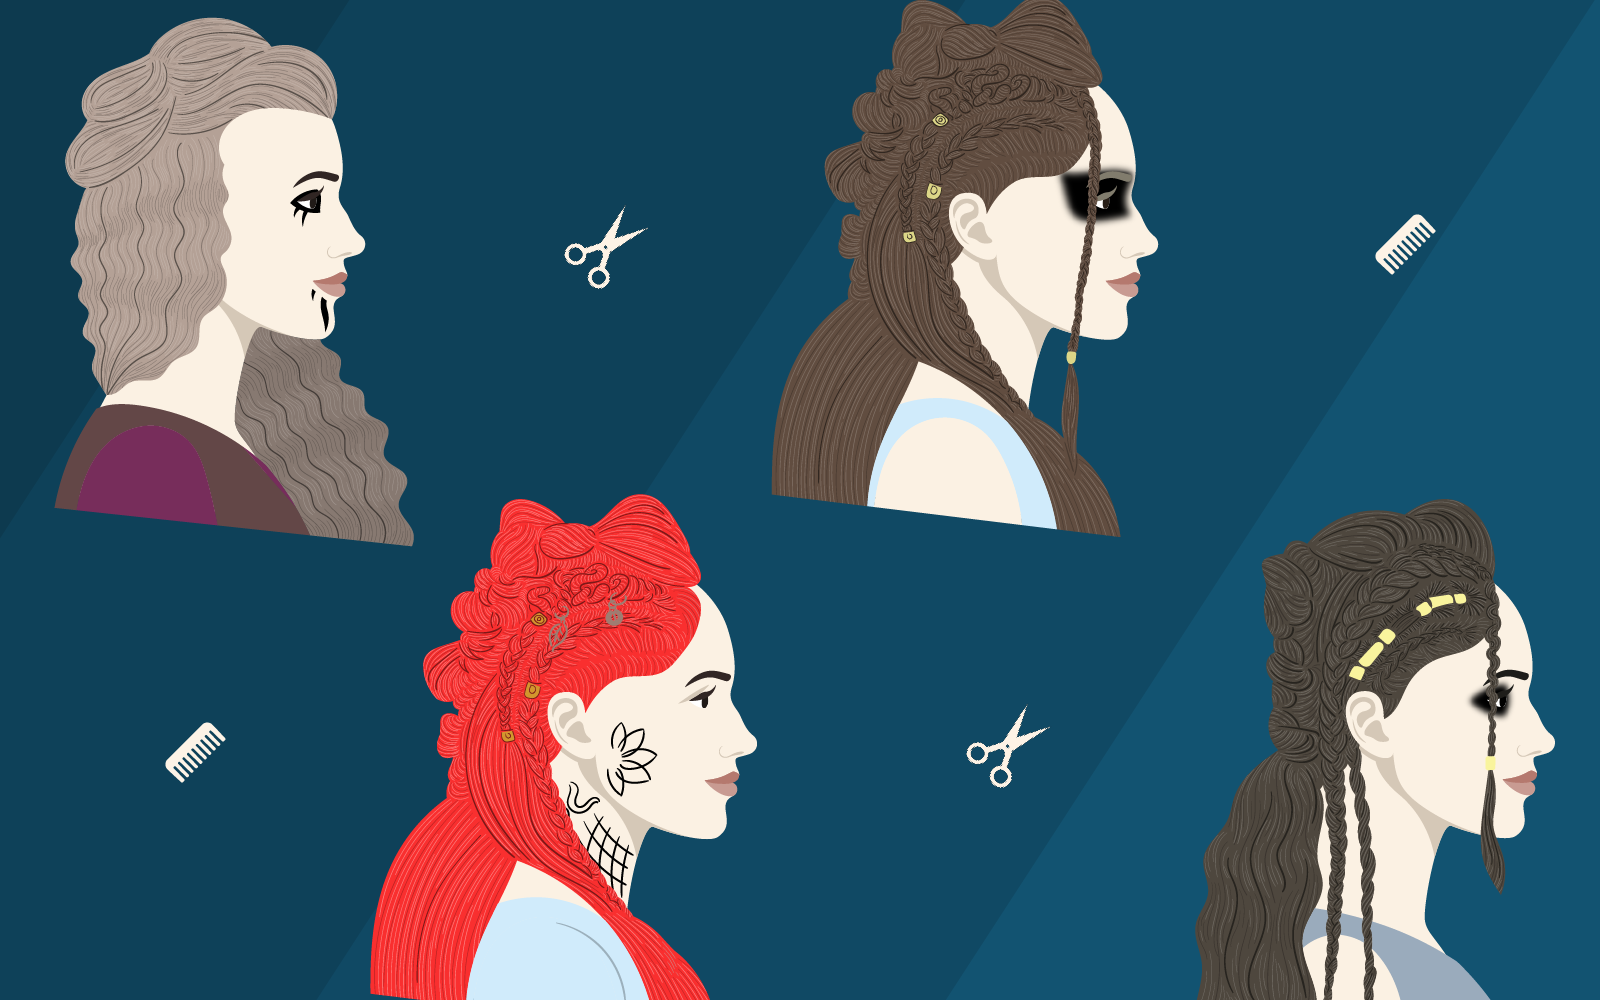 10 Badass Viking Hairstyles for Women We Love in 2022